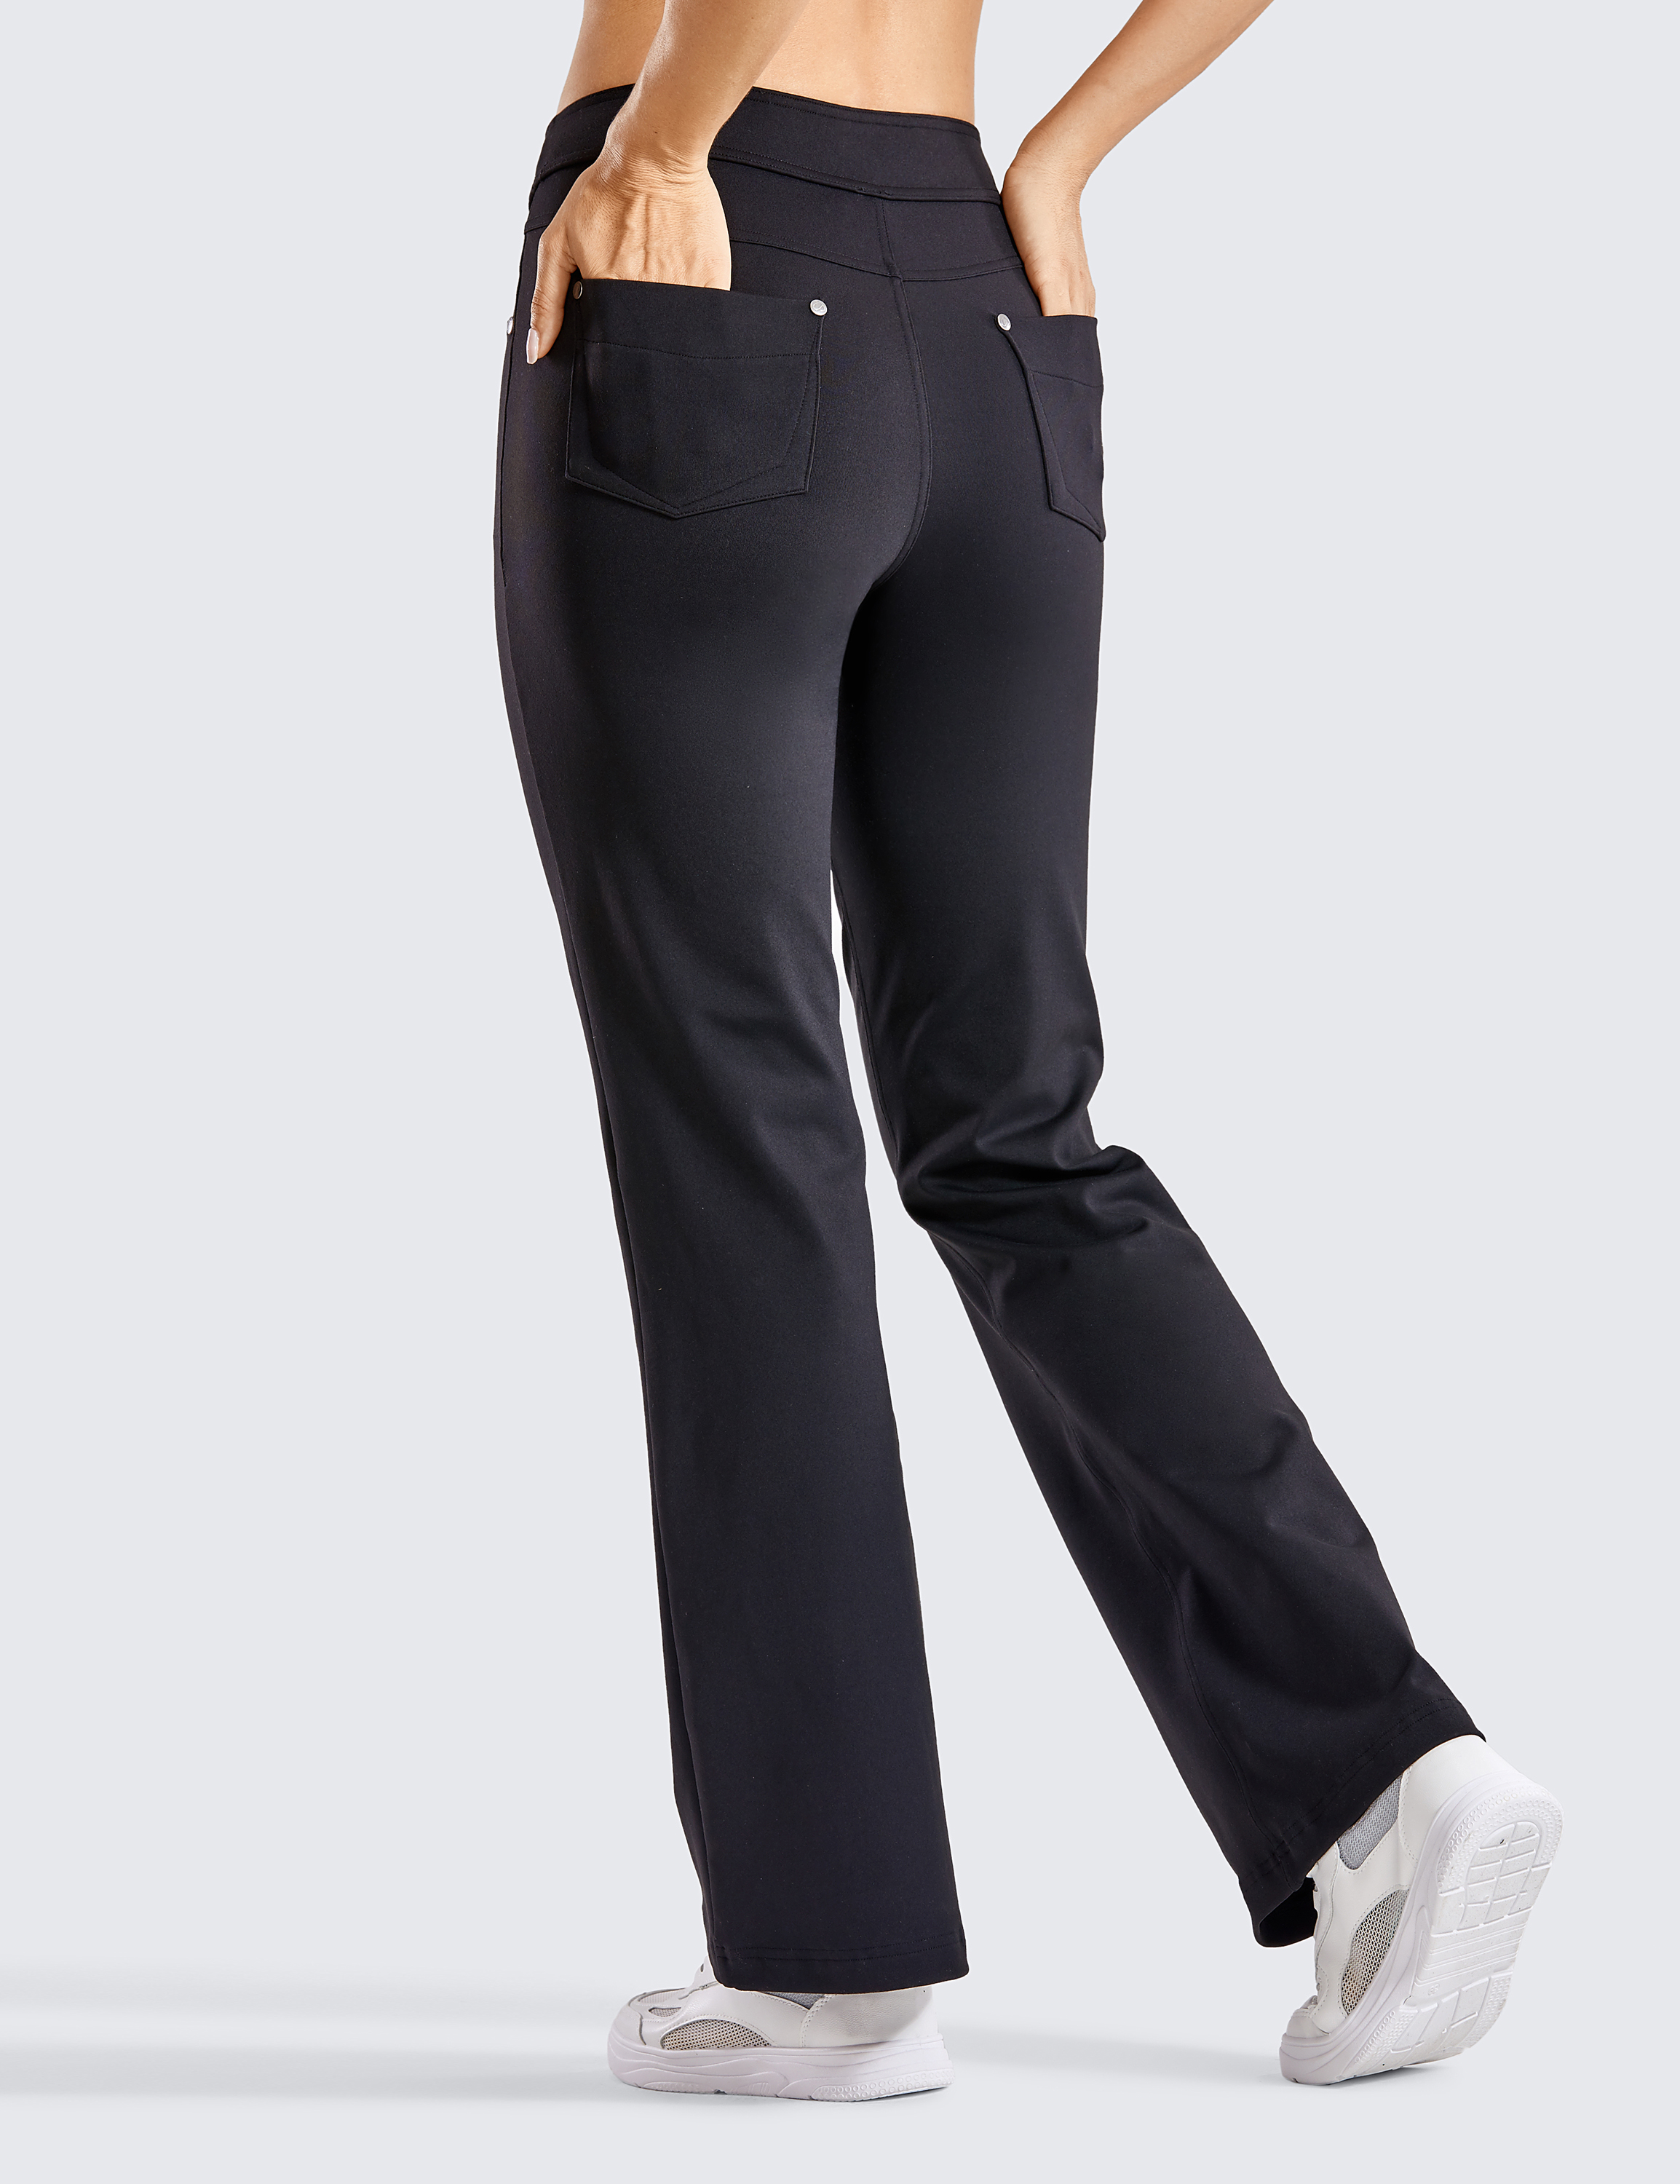 Yoga Pants,Petite/Regular/Tall Length, Yogamite Women Bootcut